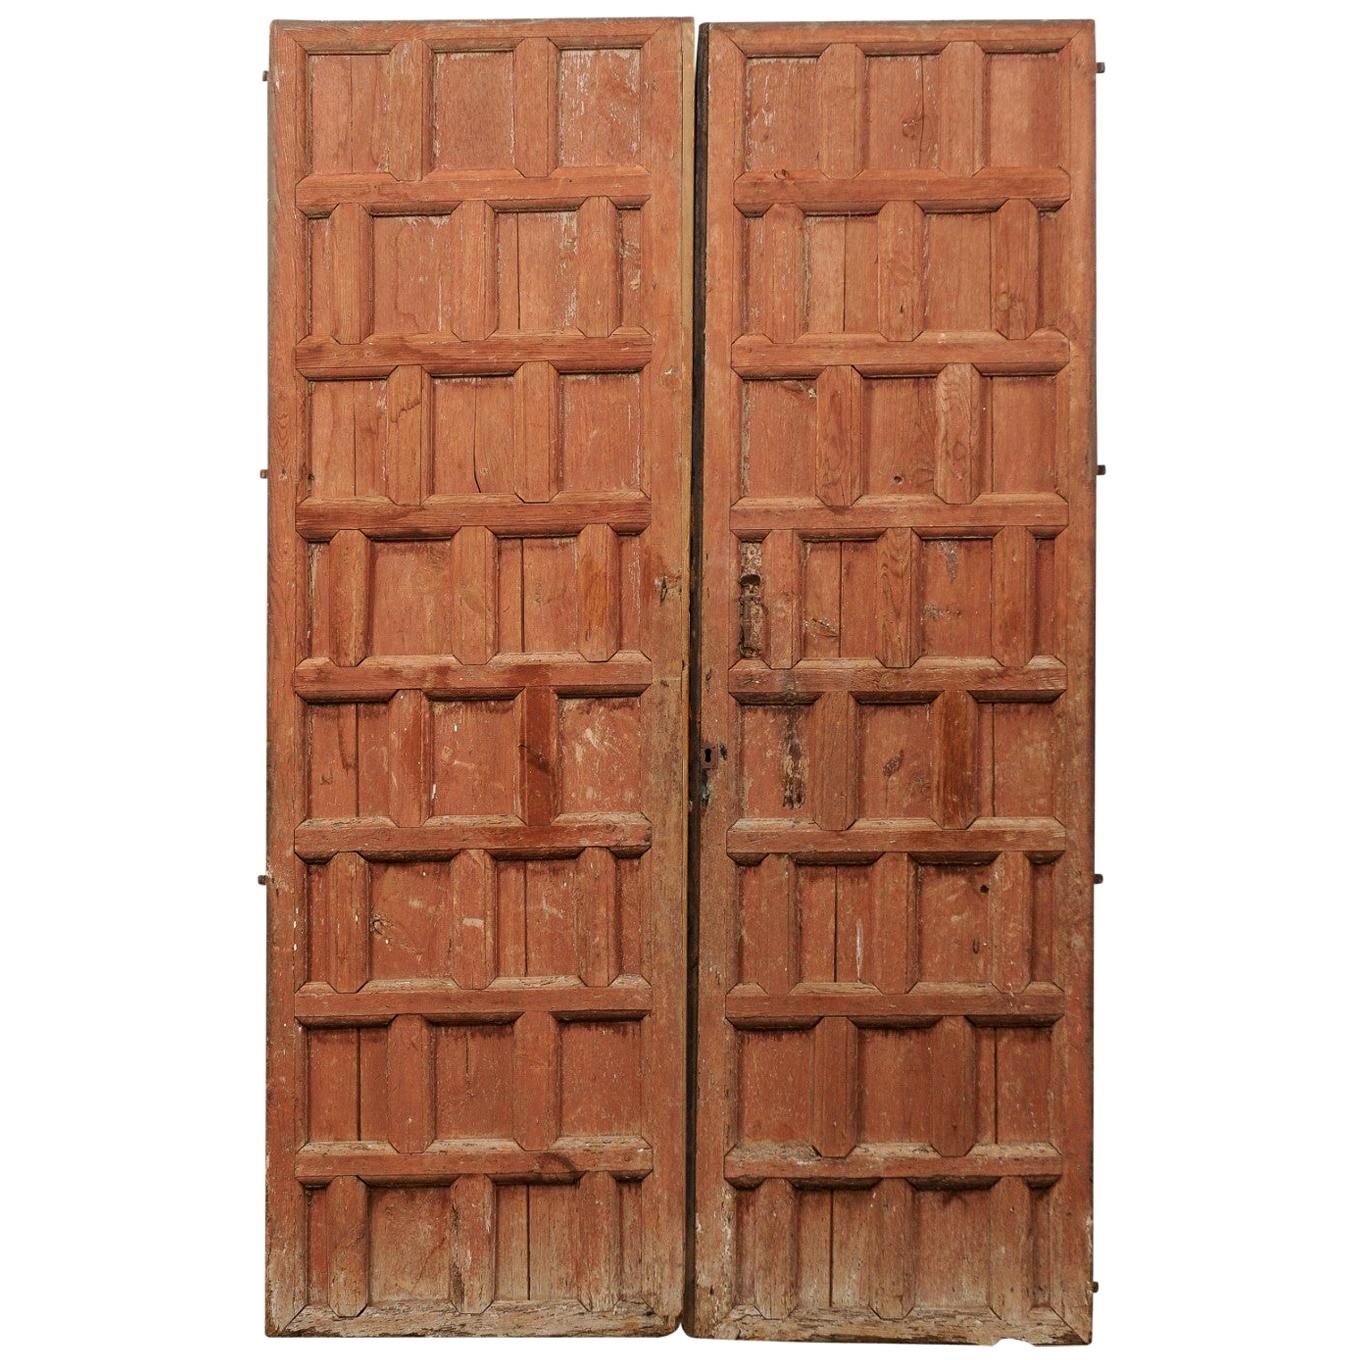 Spanish Pair of Paneled Doors with Original Hardware, Turn 18th-19th Century